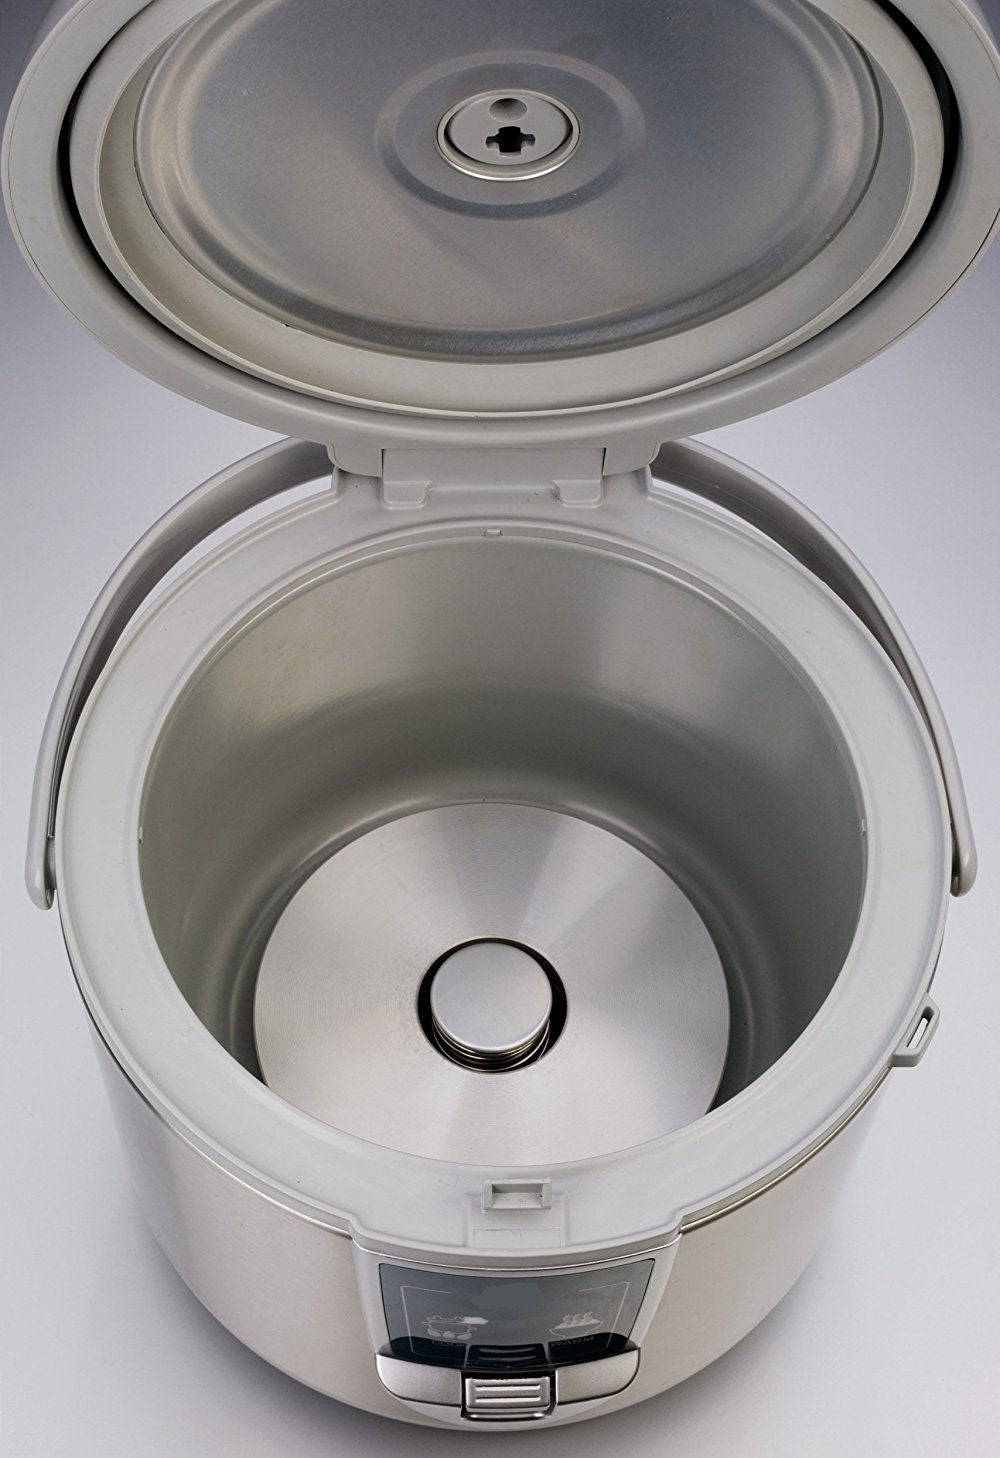 Rice cooker, 650W, 220-230V, 50Hz, 3.2 kg, 250x272x240 mm